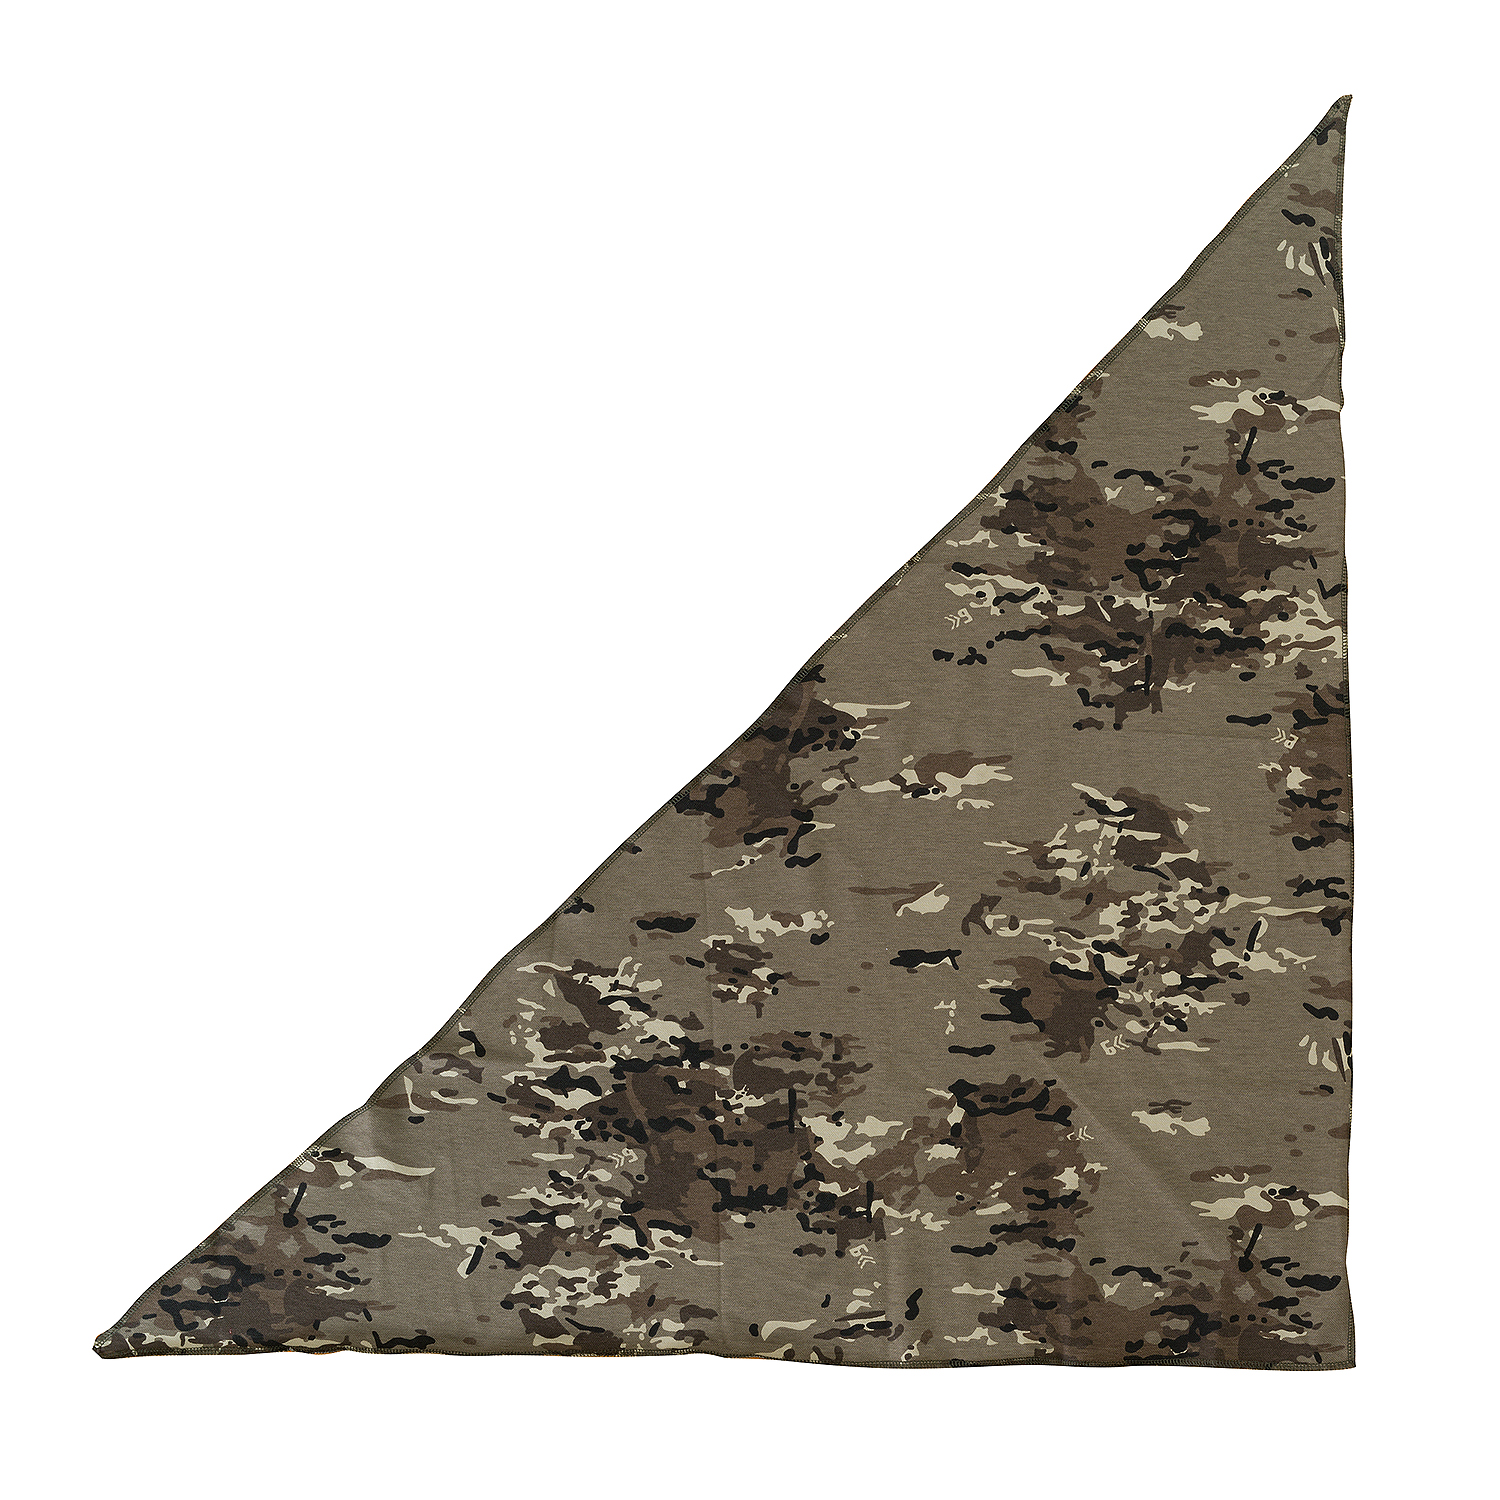 Треугольная бандана "Military 2" оптом и в розницу